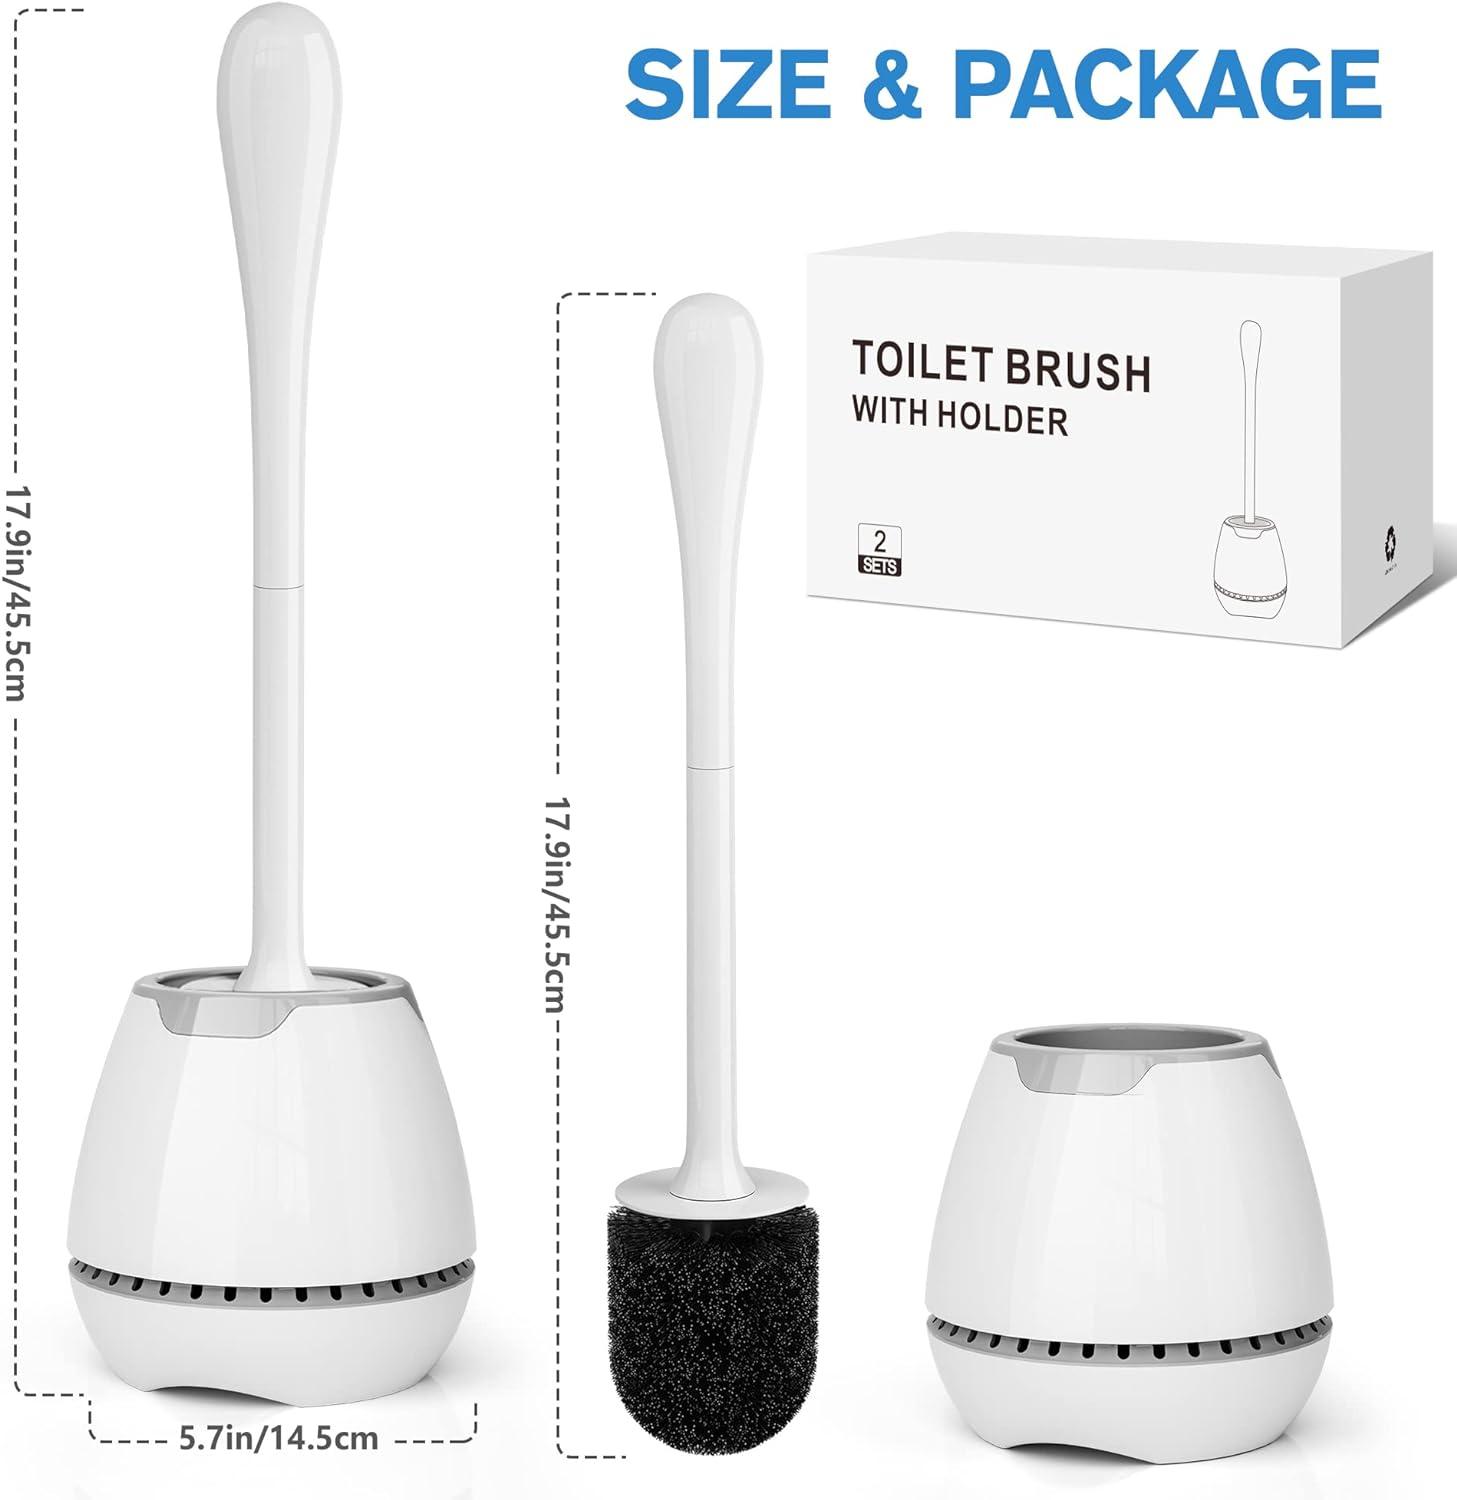 uptronic Toilet Brush and Holder 2 Pack, Toilet Brush with